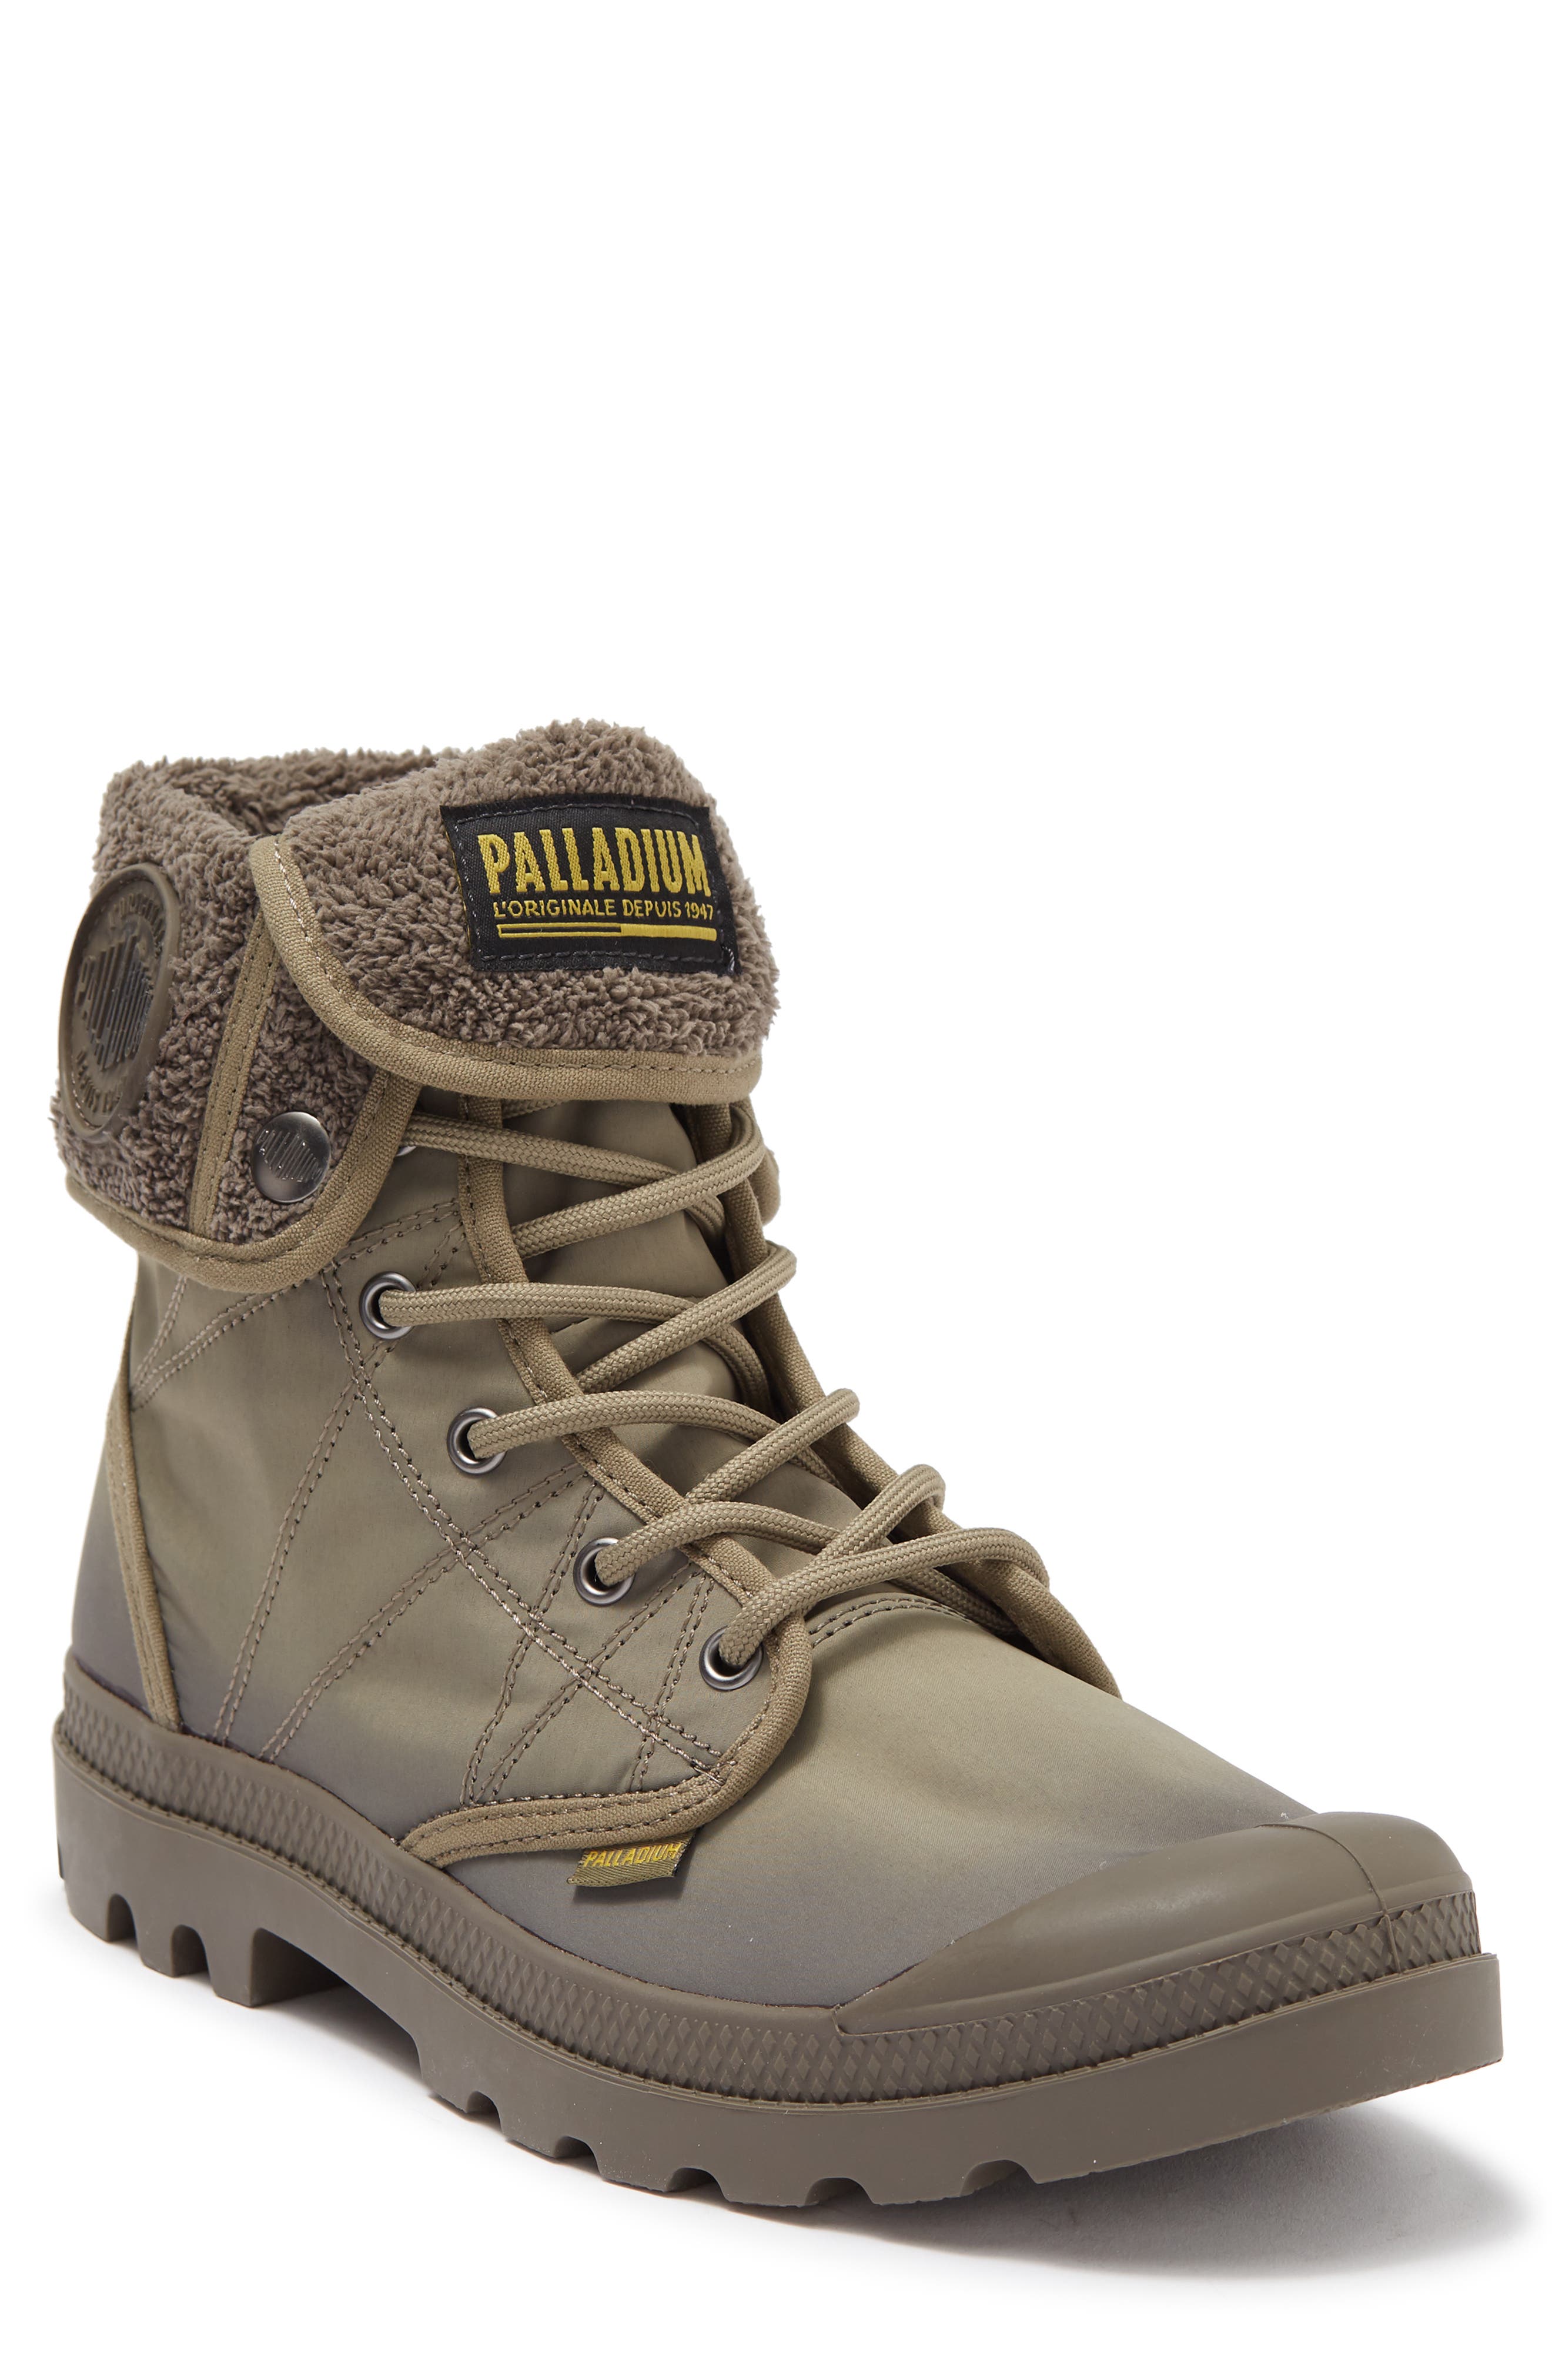 Palladium Pallabrouse Baggy Wax Boots Schuhe High Top Sneaker Stiefel 75534-046